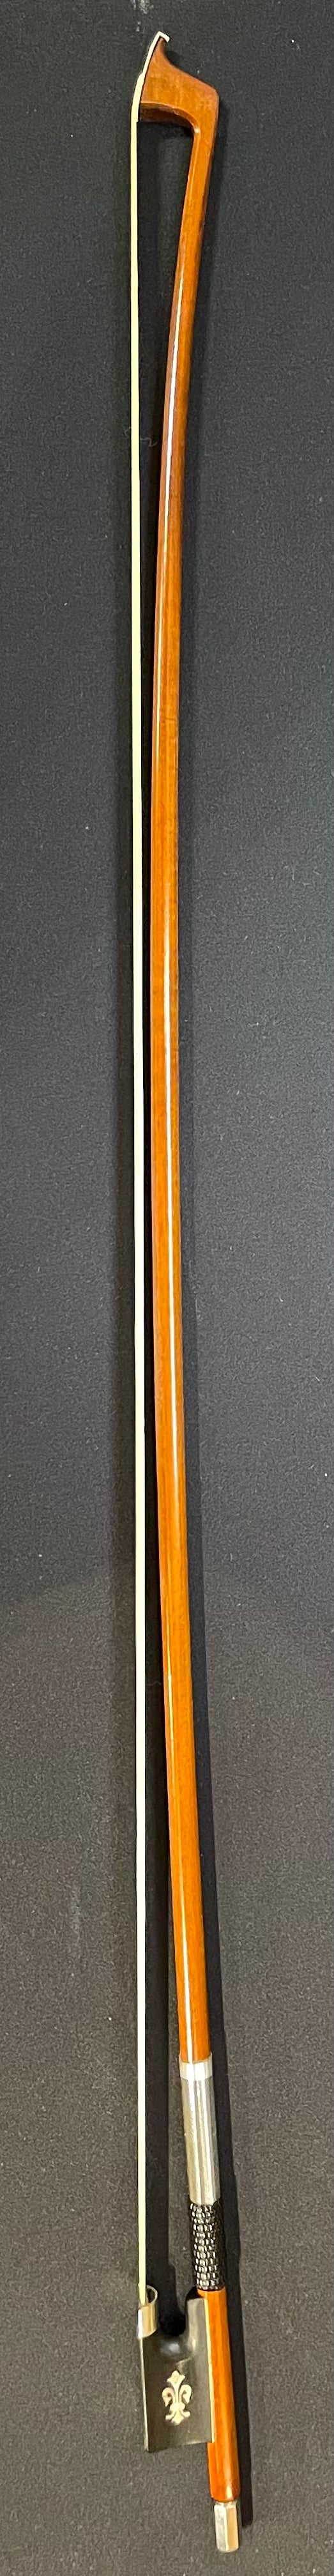 4/4 Violin Bow - MEEB Wood Model